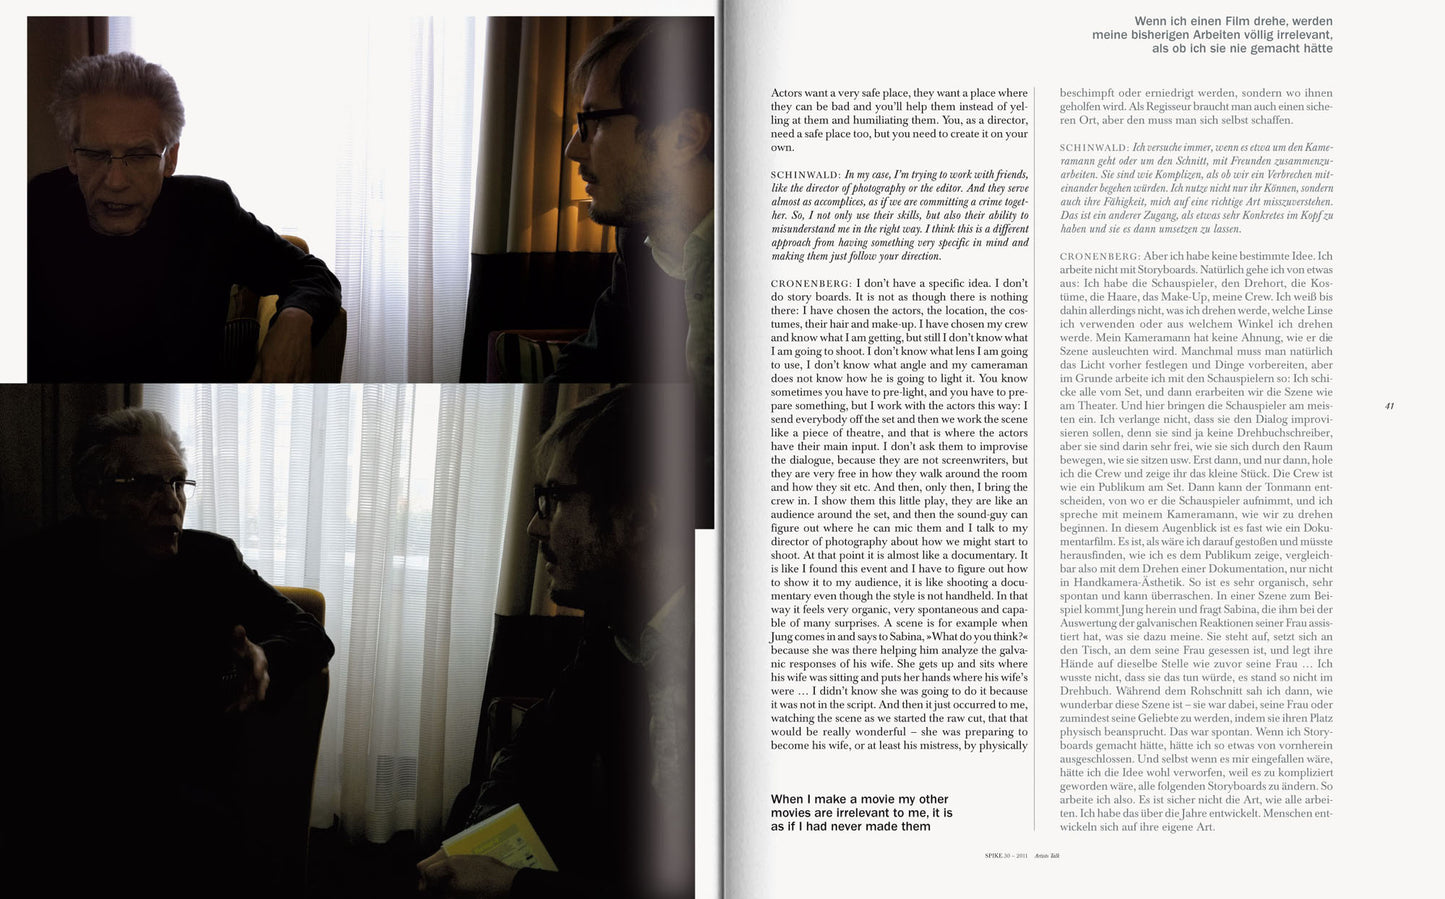 ISSUE 30 (WINTER 2011)